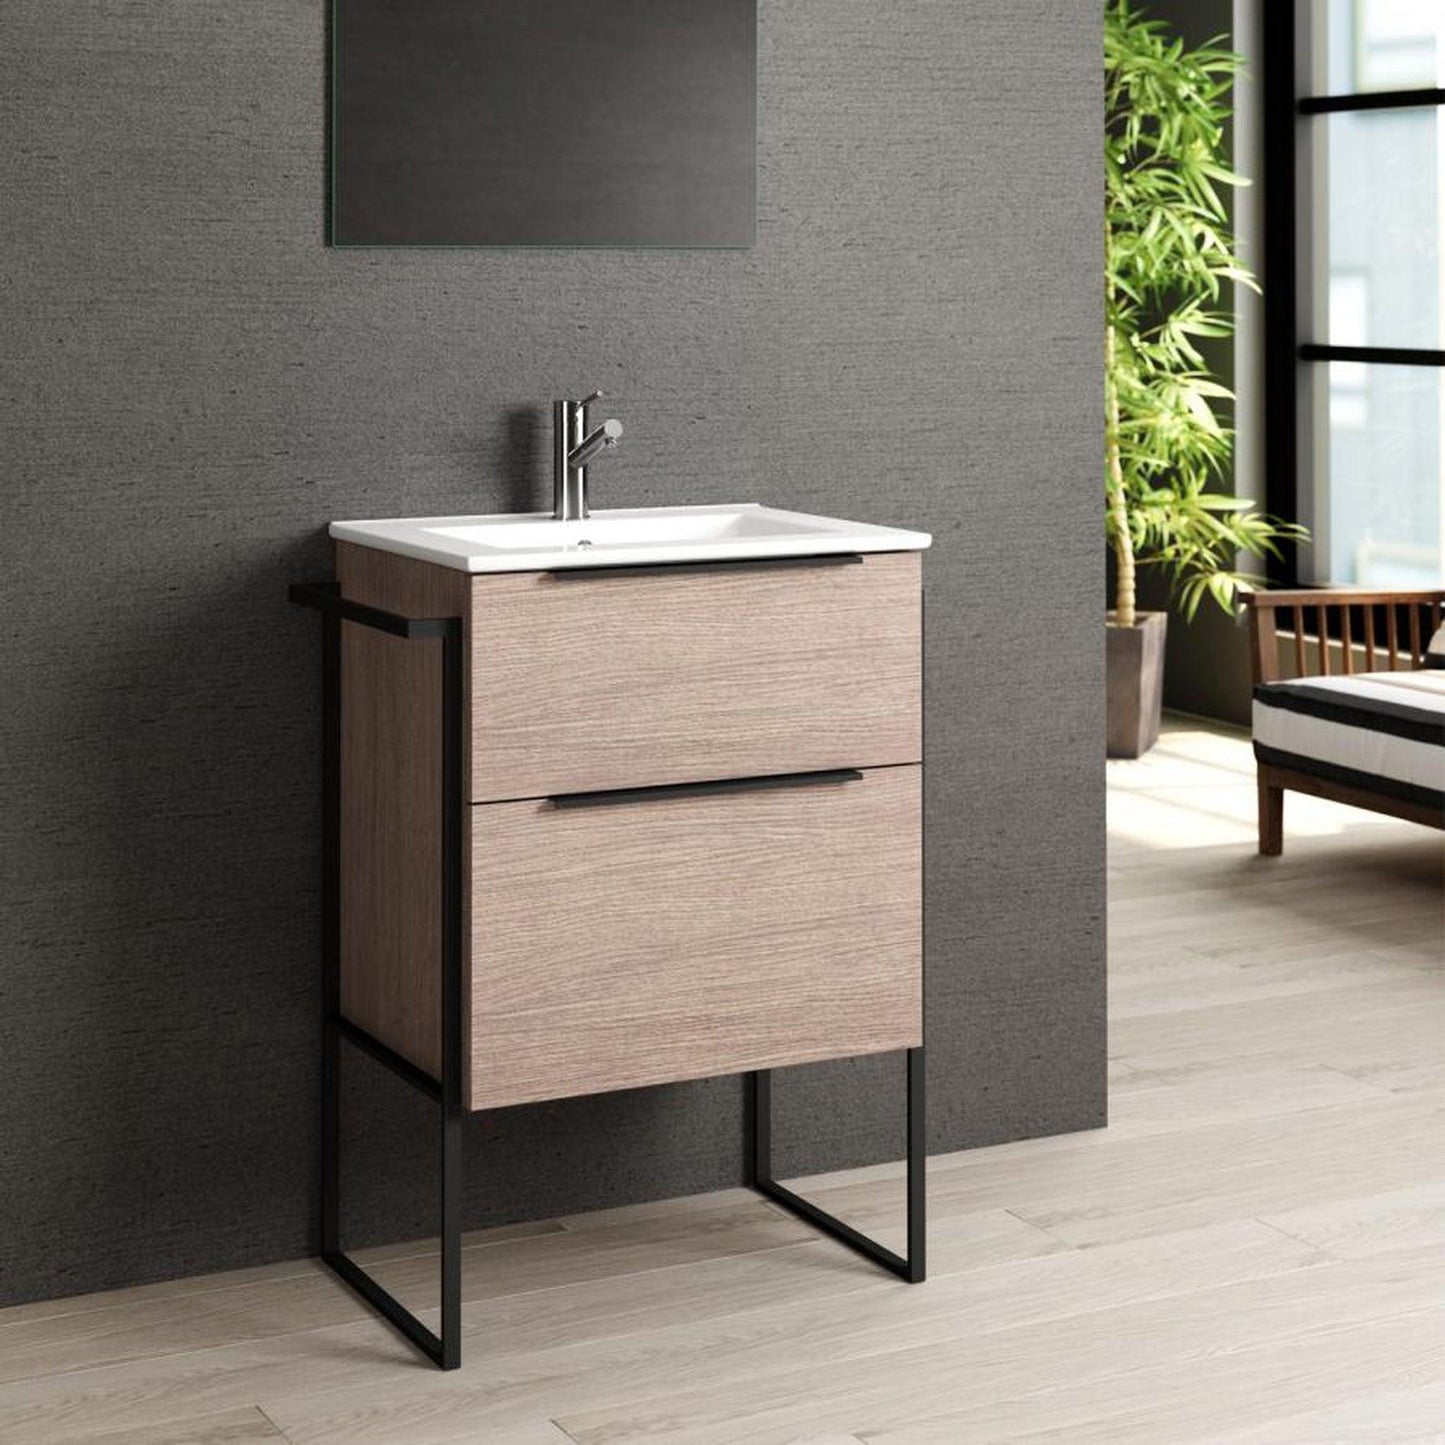 Eviva Marina 24” x 34” Natural Oak Freestanding Bathroom Vanity With White Integrated Porcelain Sink